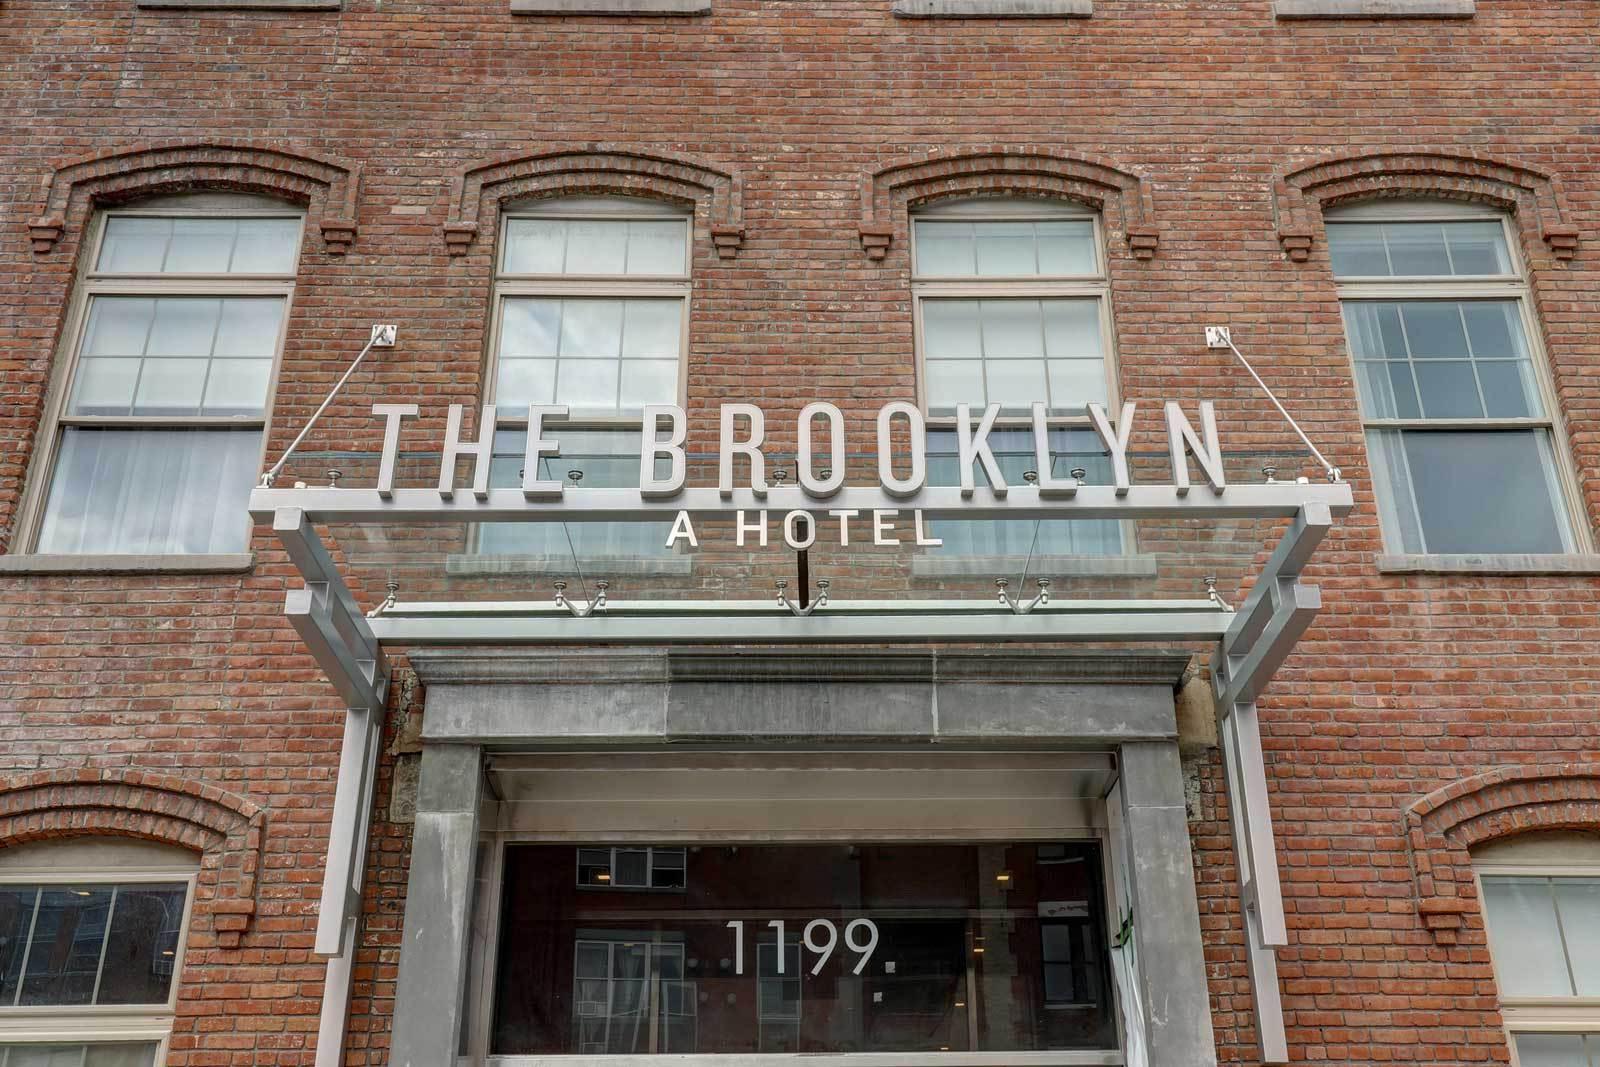 Photo of The Brooklyn Hotel, Brooklyn, NY